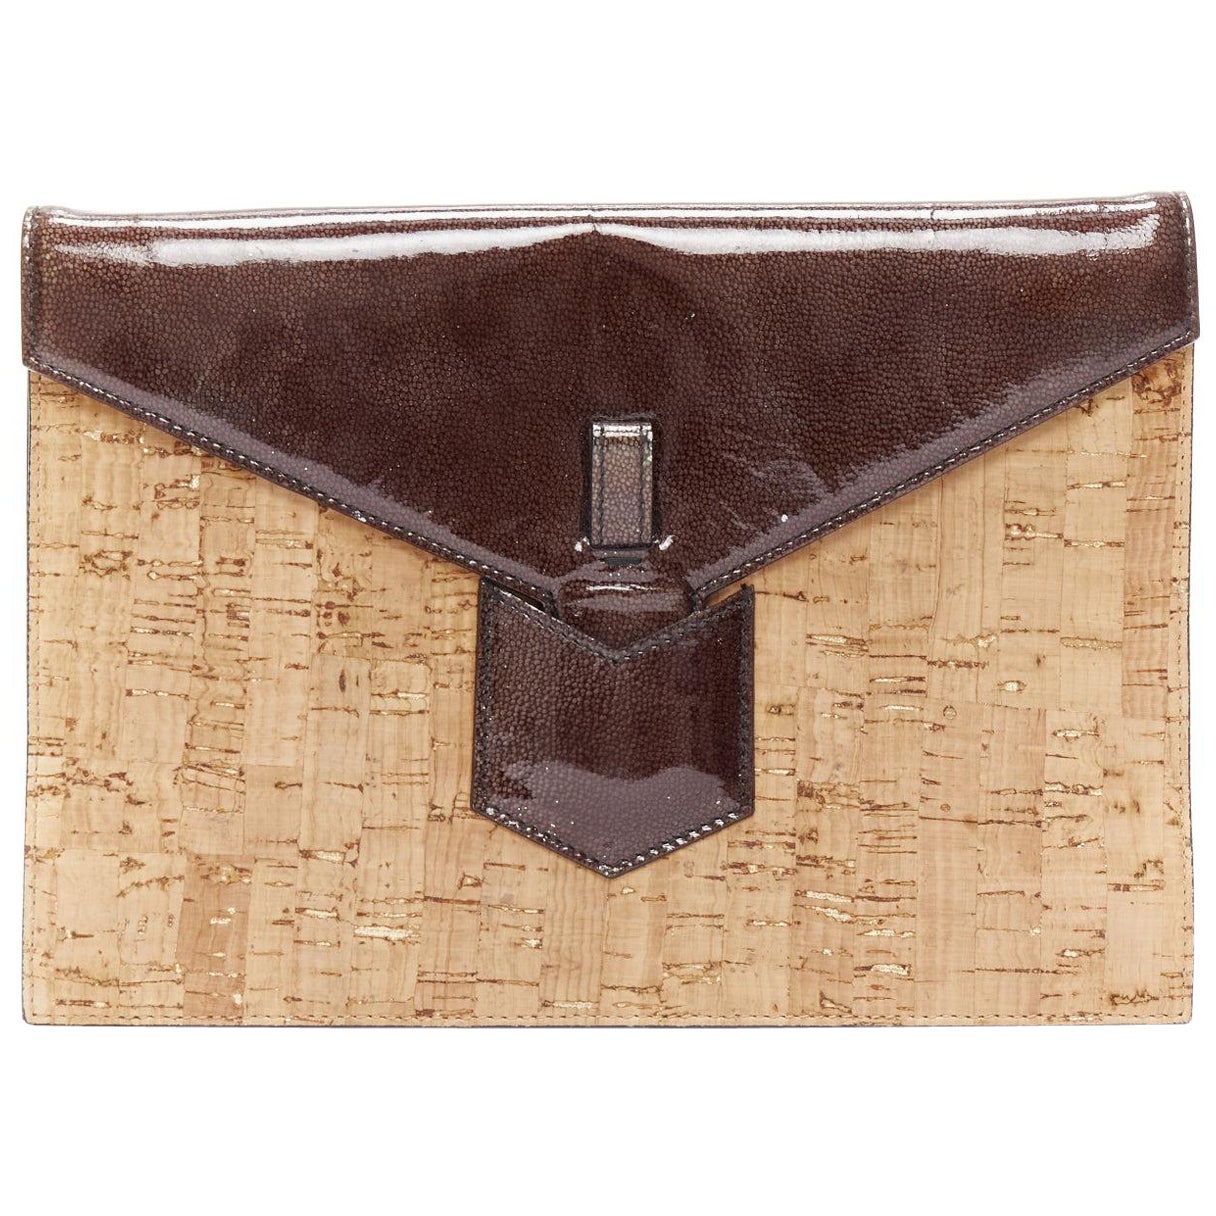 YVES SAINT LAURENT Vintage Cork brown patent leather small envelope clutch bag For Sale